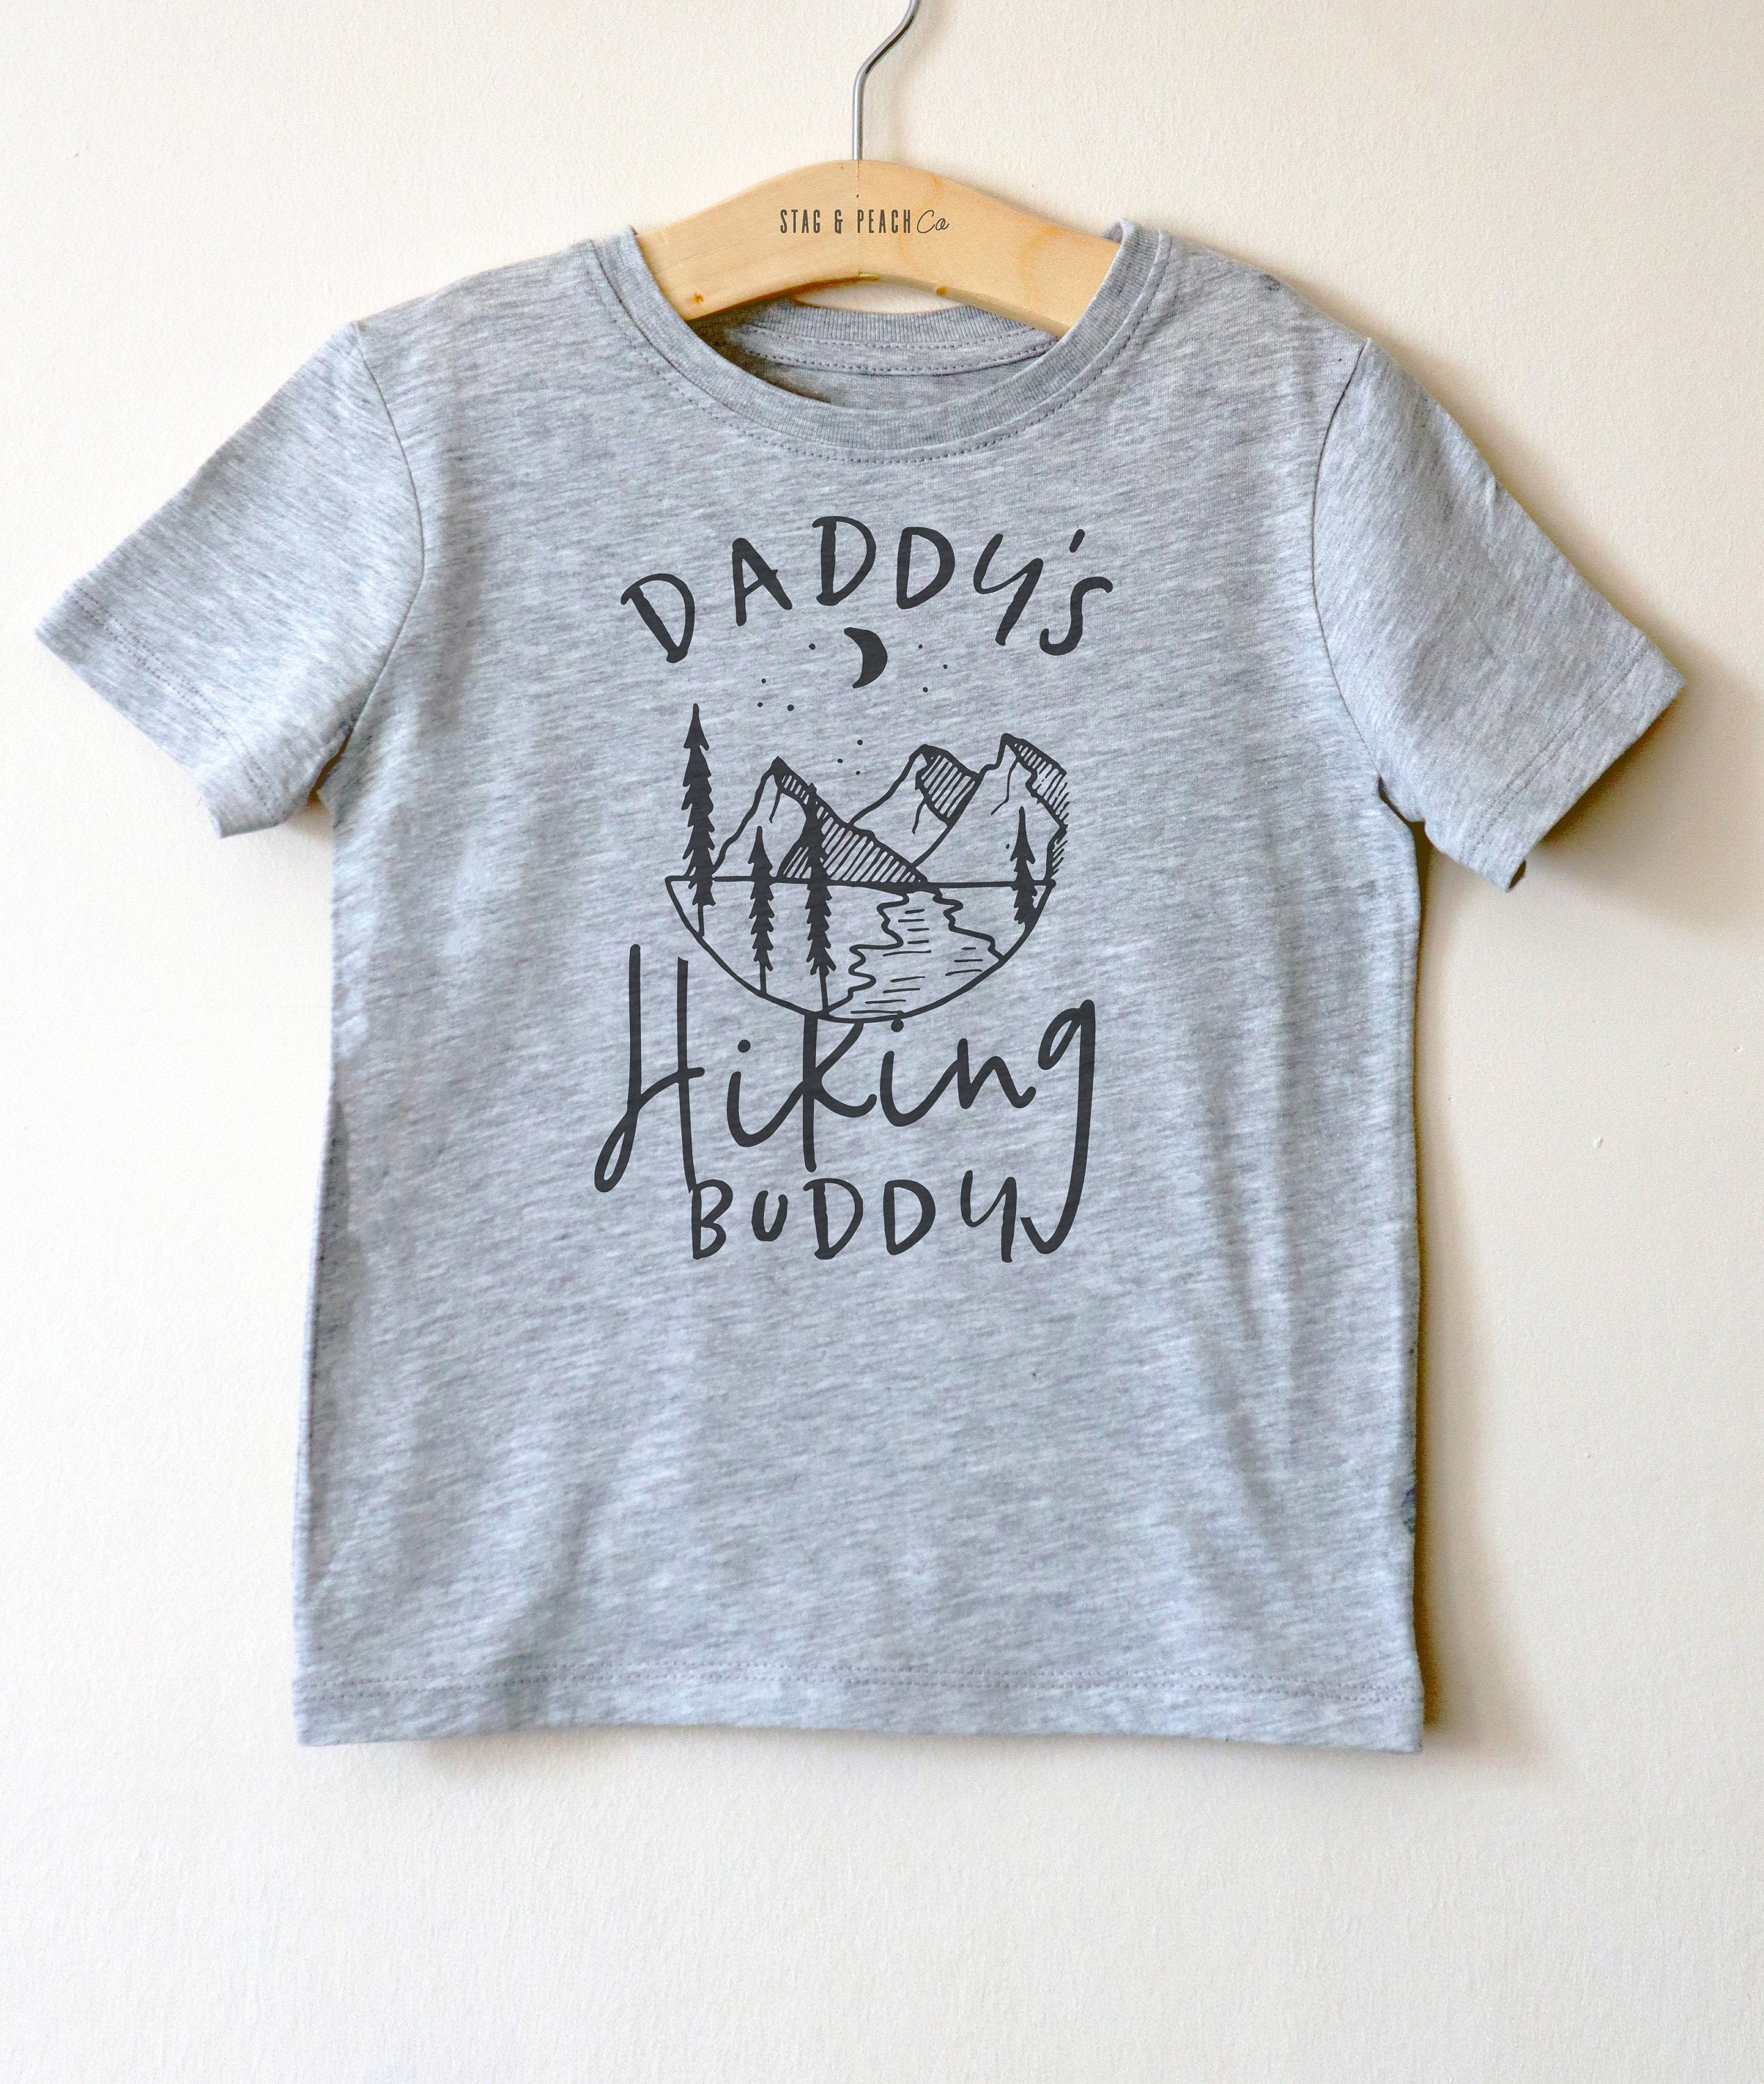 Daddy's fishing buddy Toddler T-Shirt, Fishing kids shirt, Daddy's bud –  shirtcreationzstore